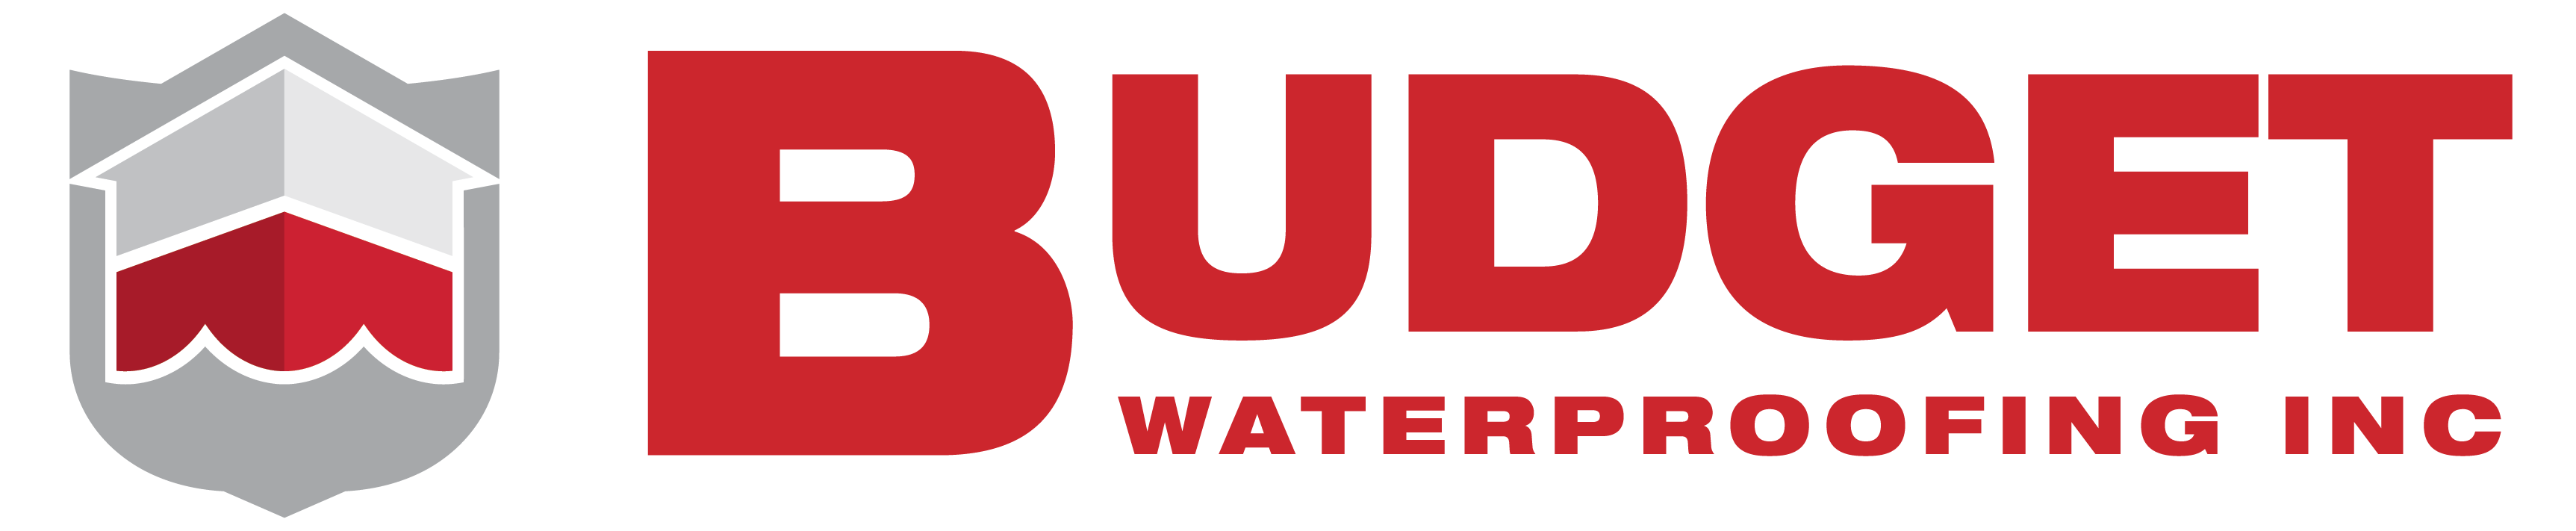 Budget Waterproofing, Inc. Logo